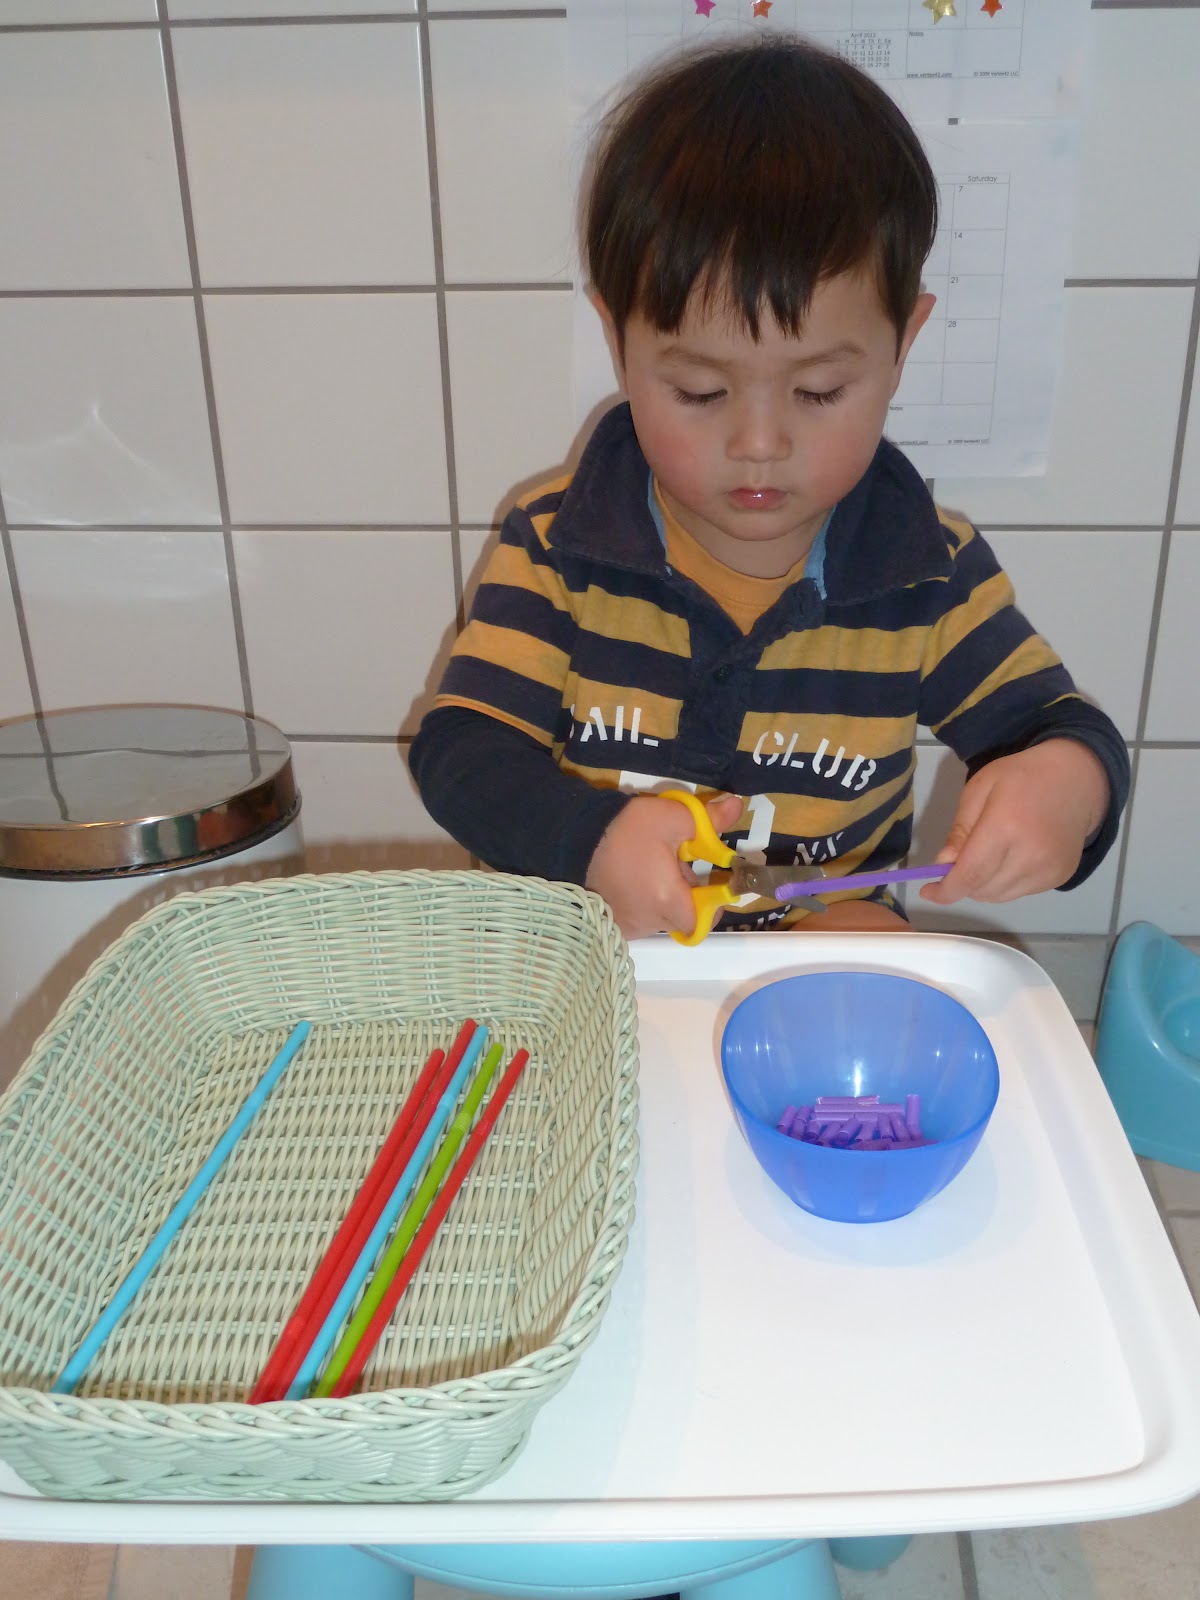 Three Minute Montessori - Practical life- a cutting activity! I